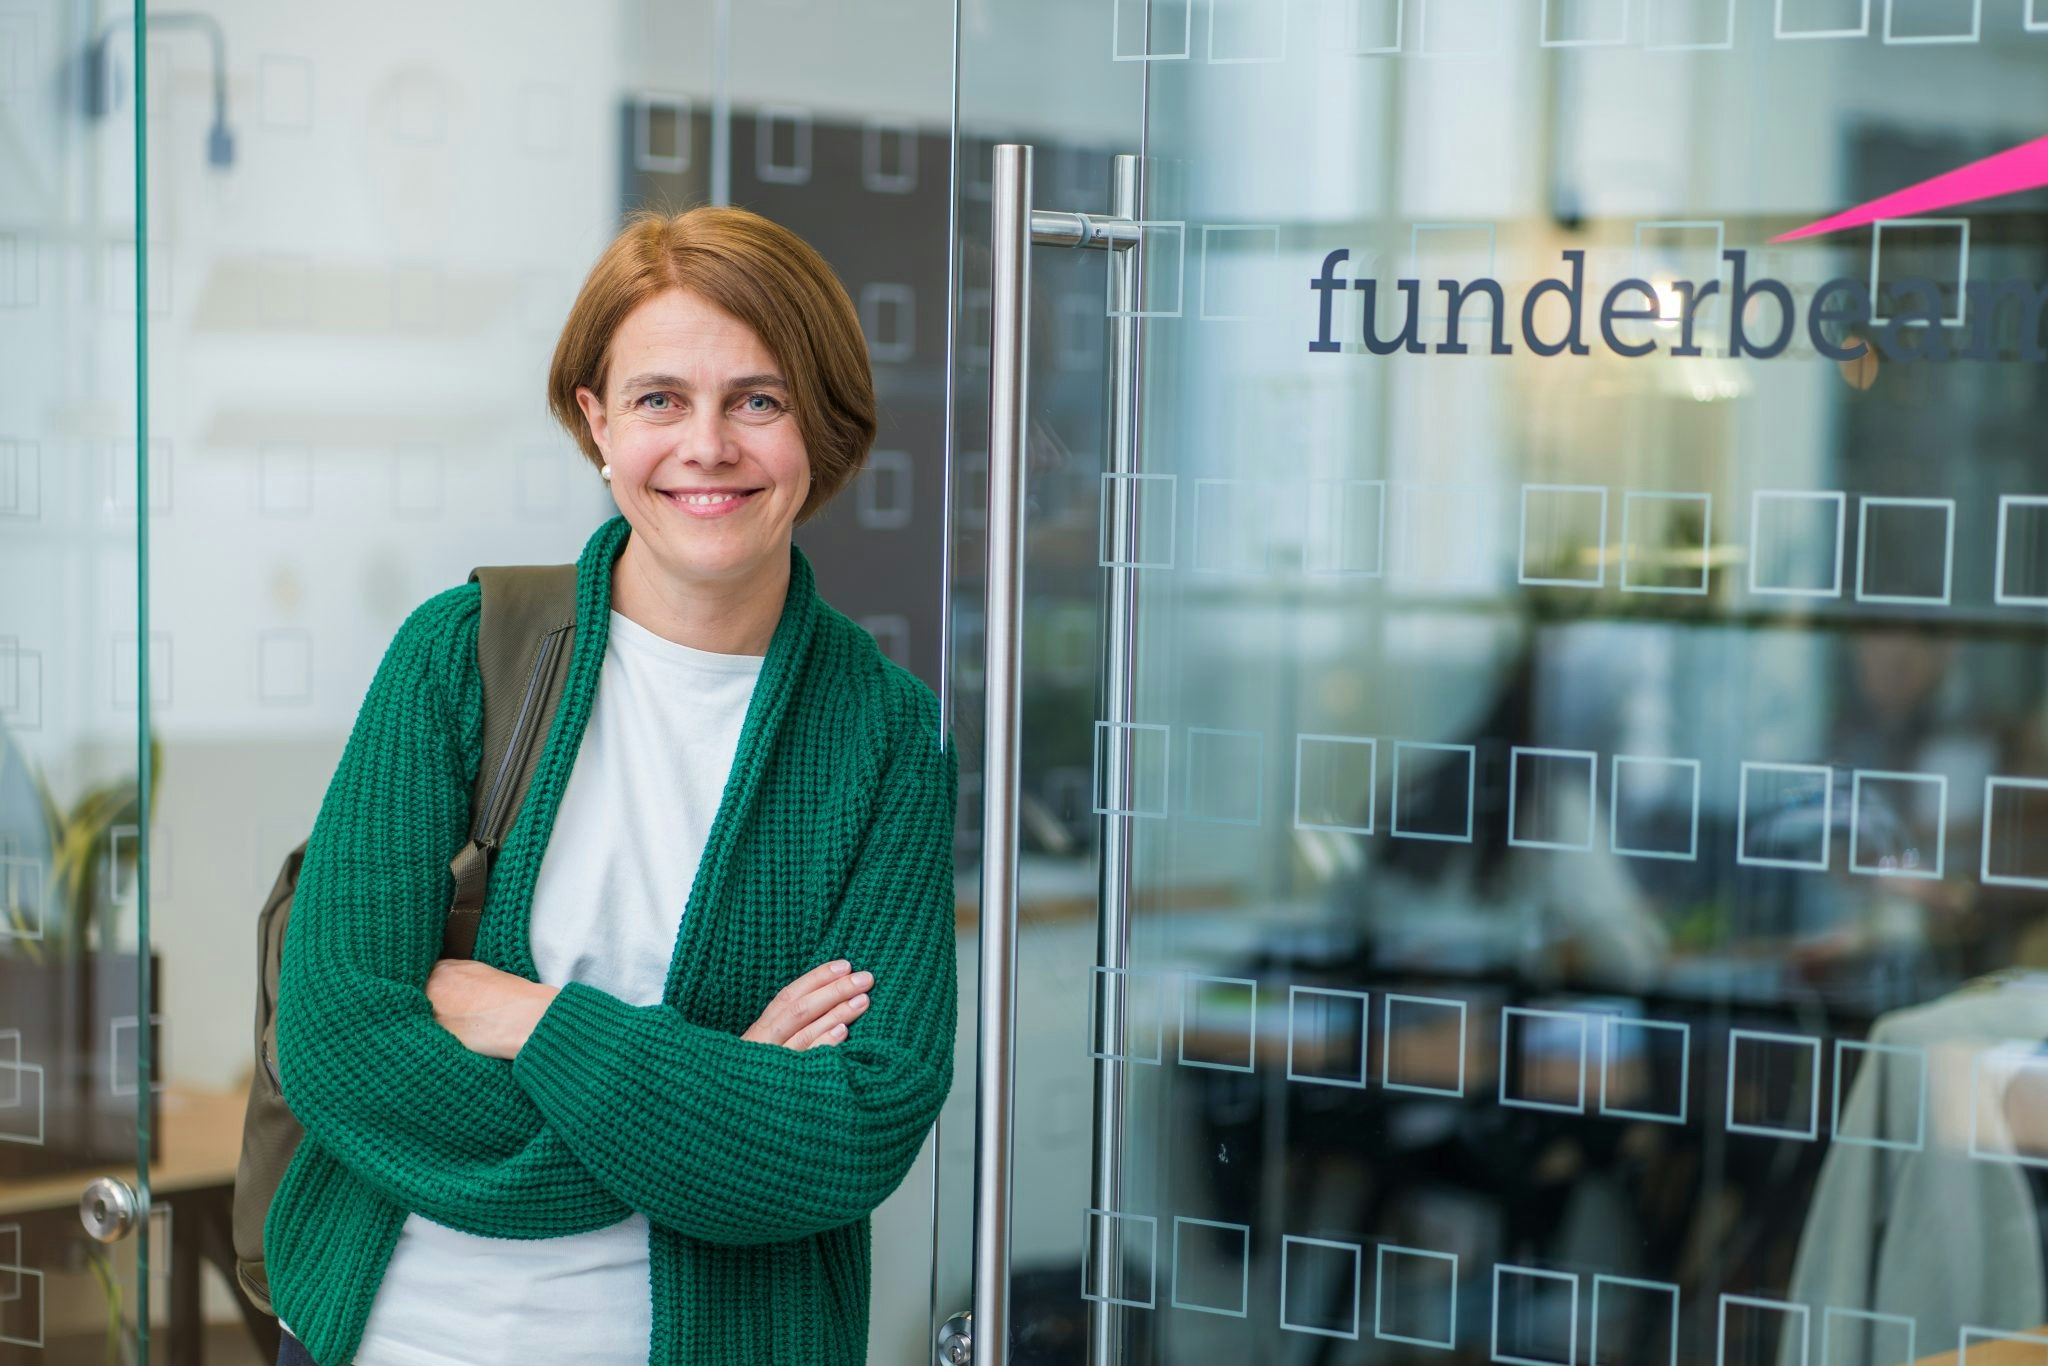 Funderbeam CEO and founder Kaidi Ruusalepp